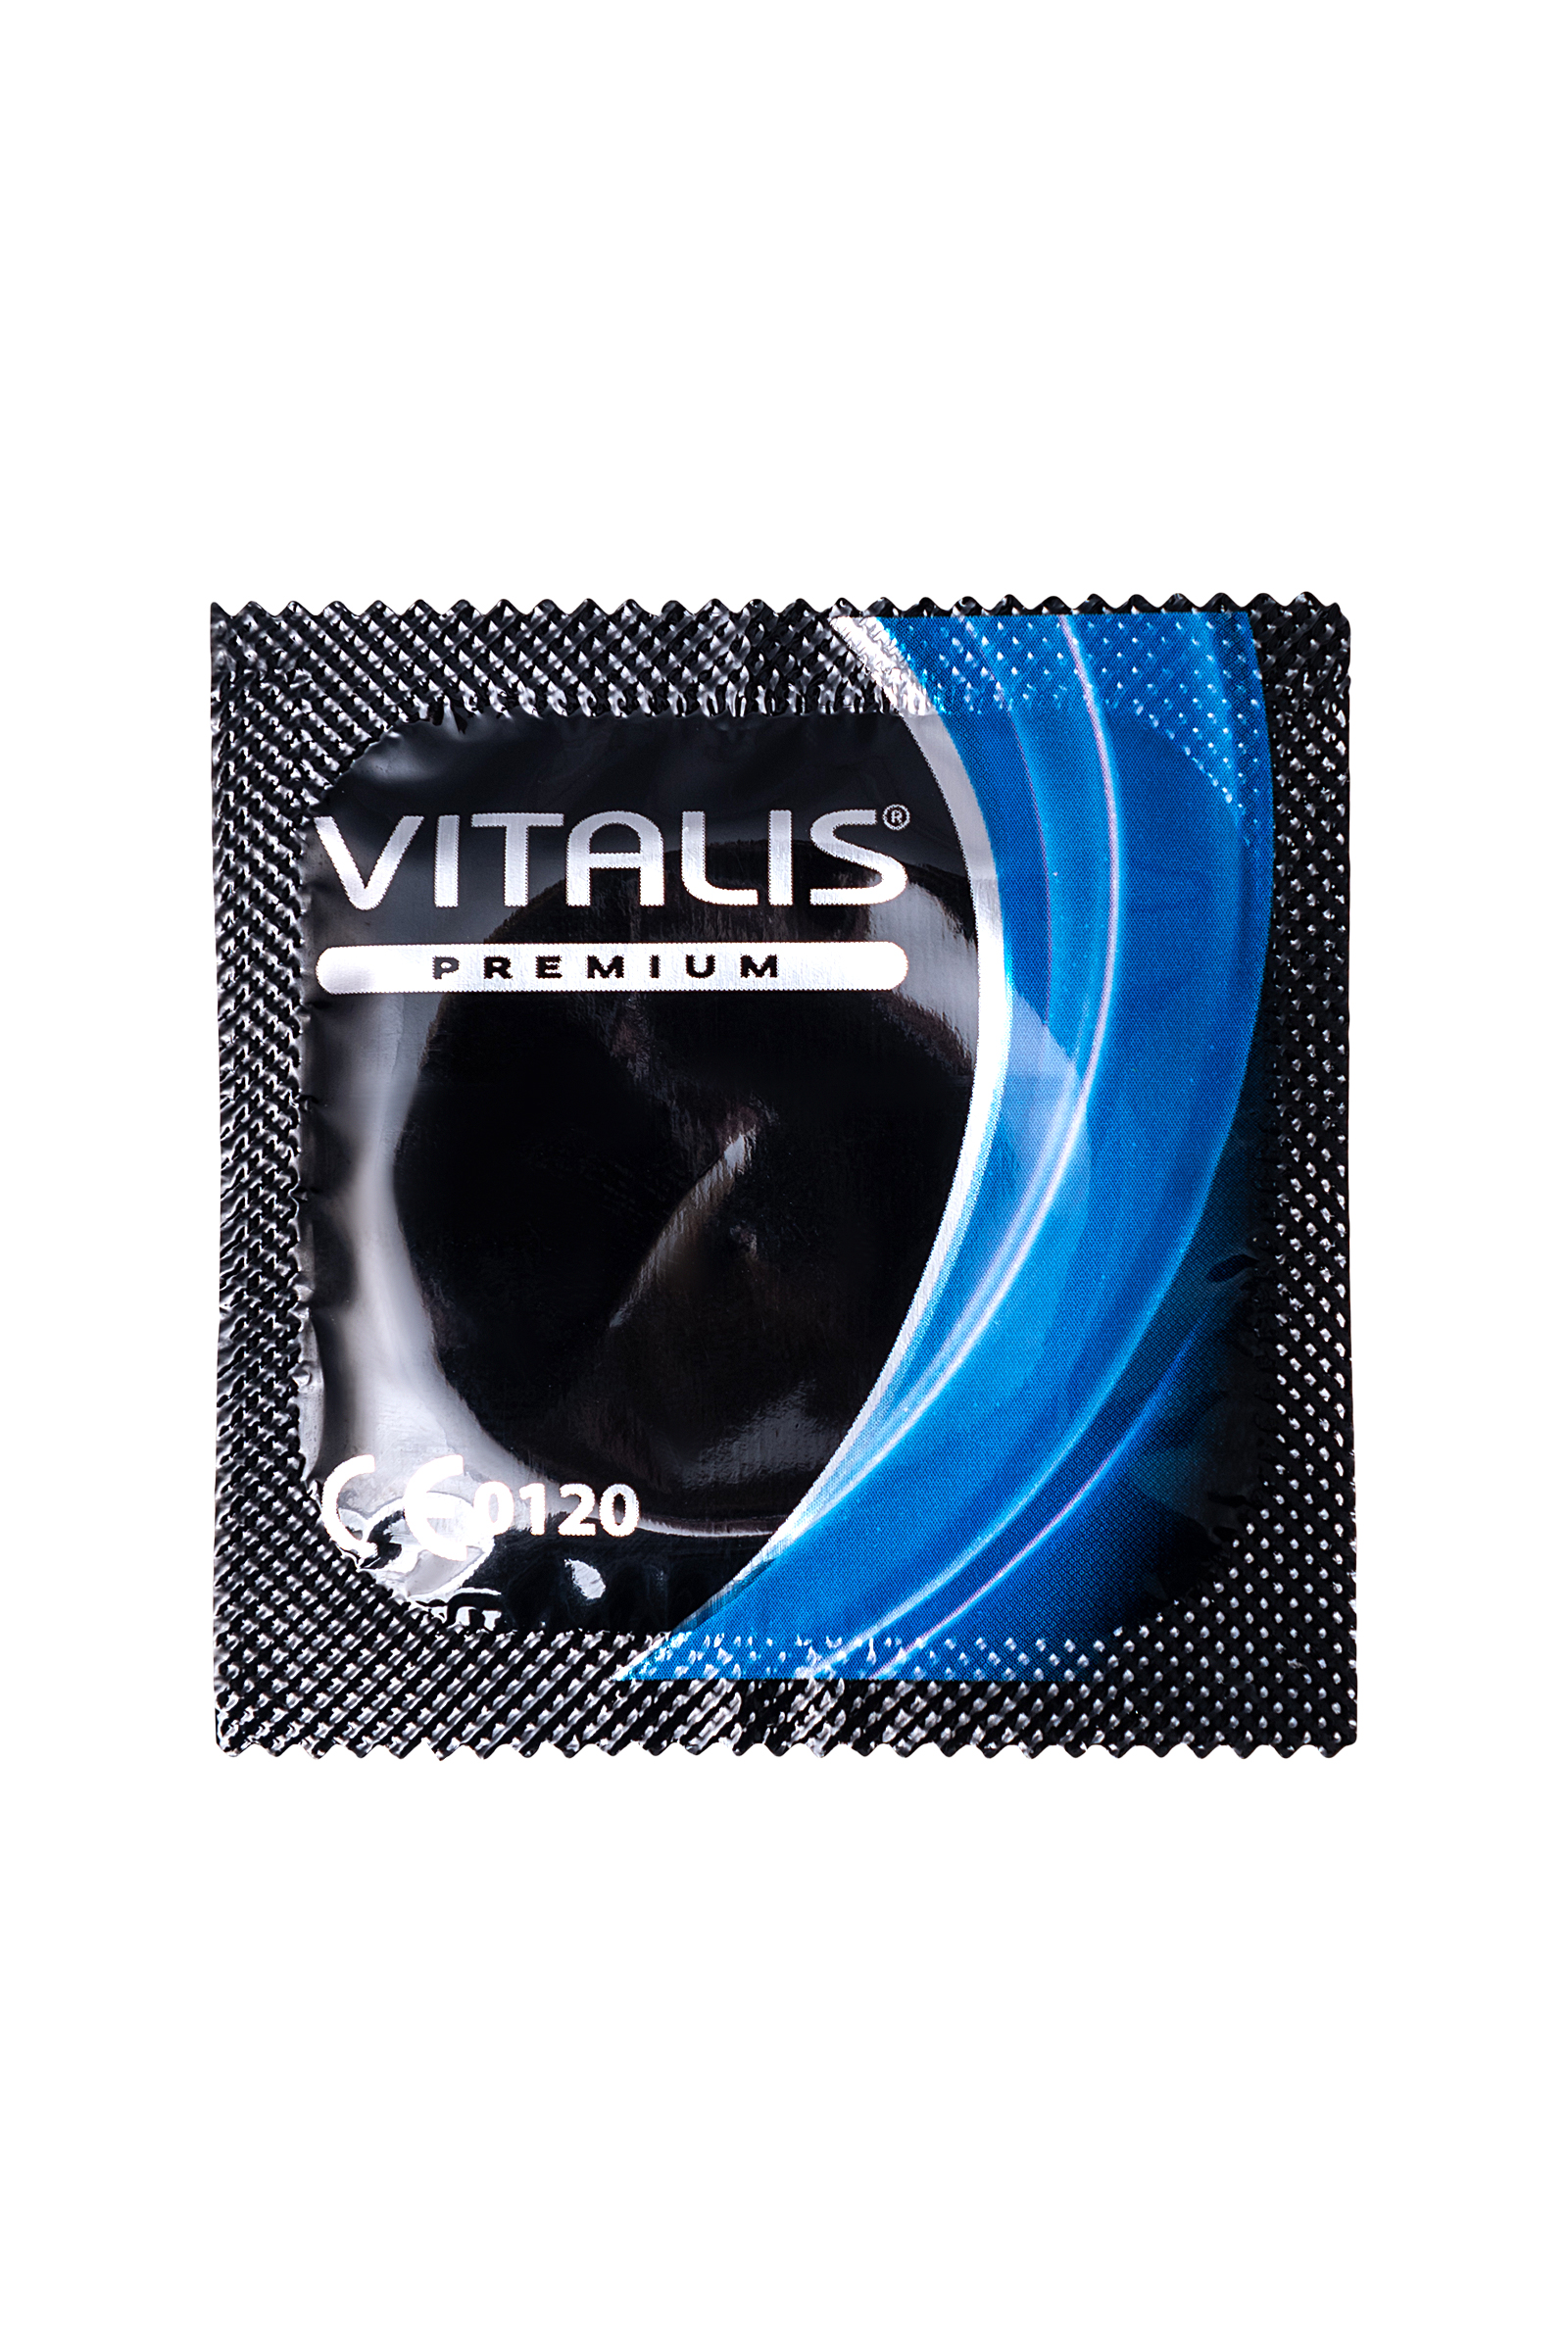 Презервативы классические Vitalis Premium, 12 шт